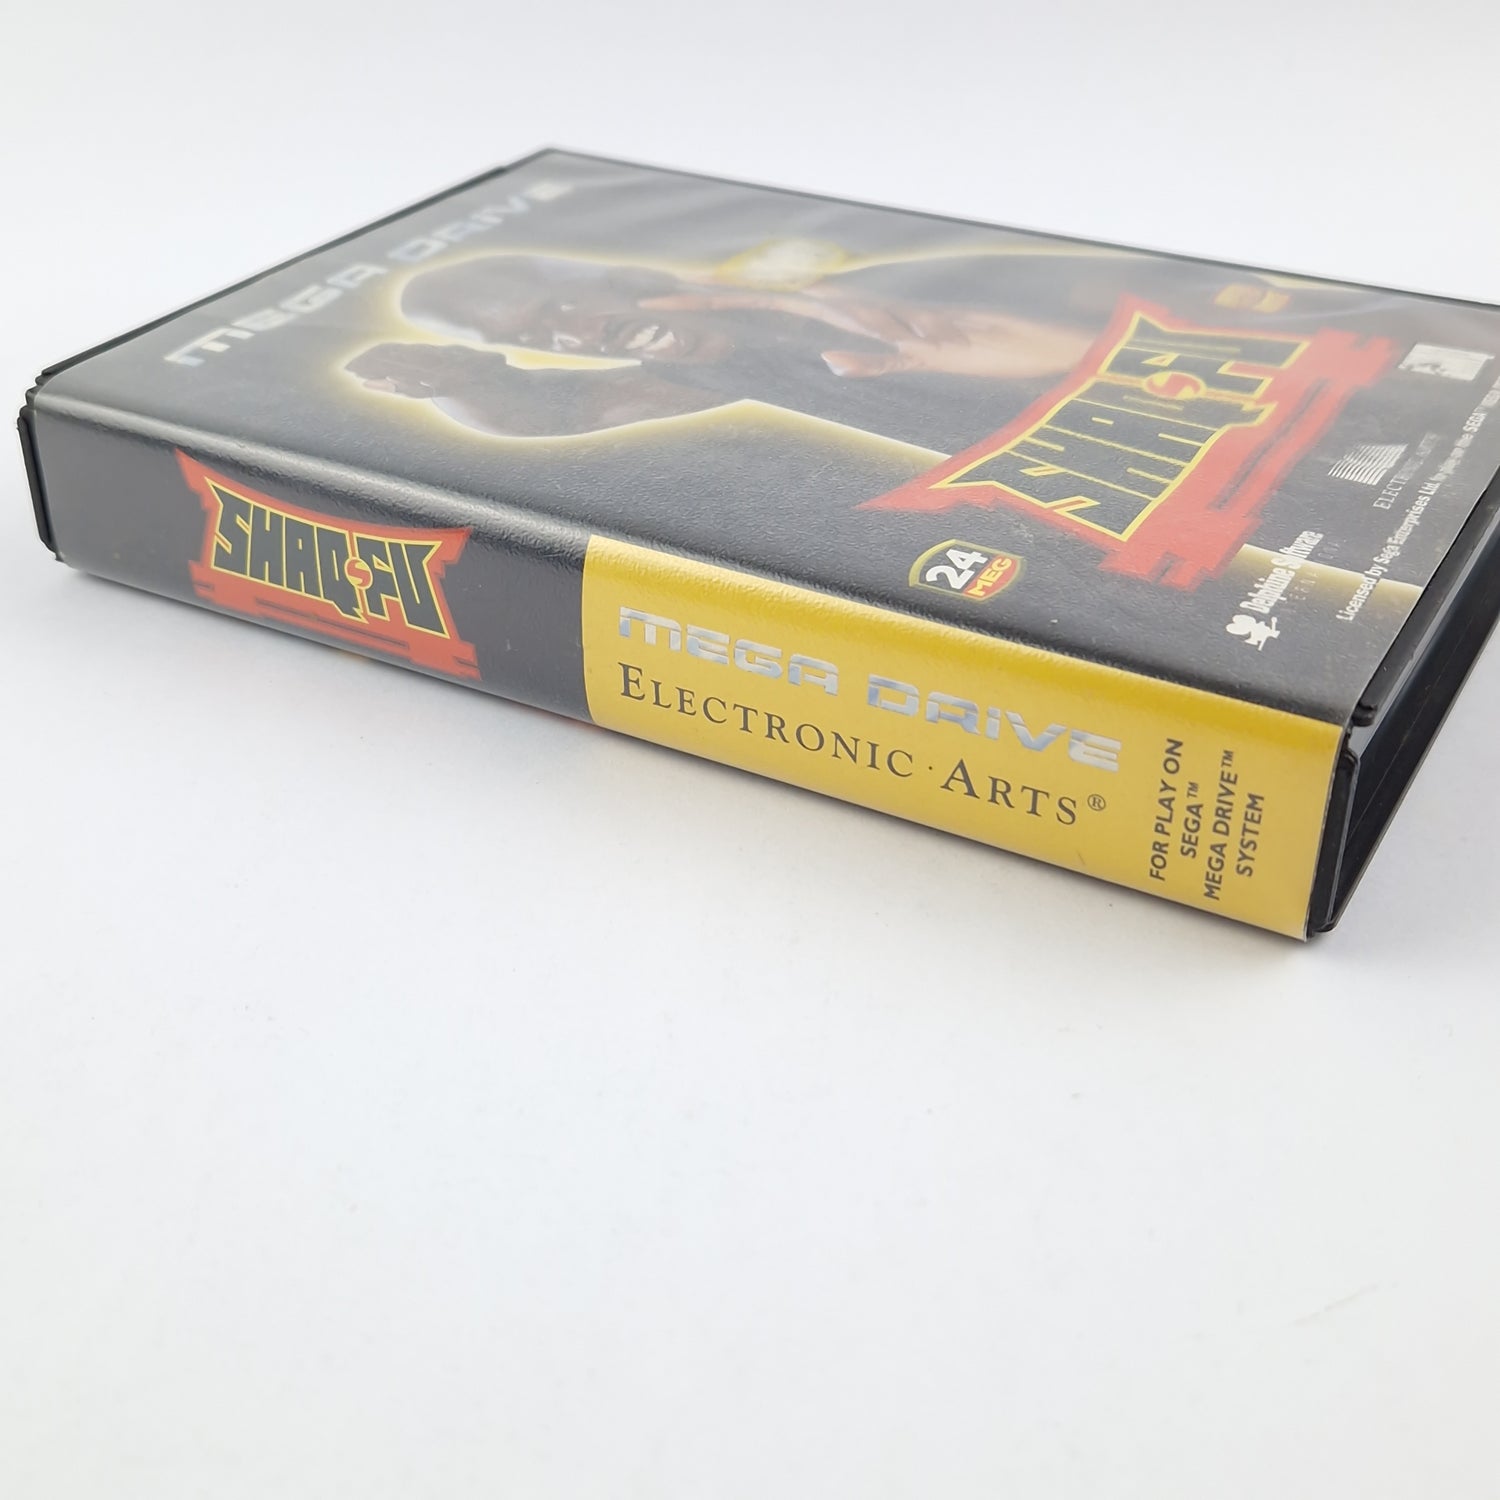 Sega Mega Drive Game: Shaq-Fu - Module Instructions OVP cib / MD PAL Game